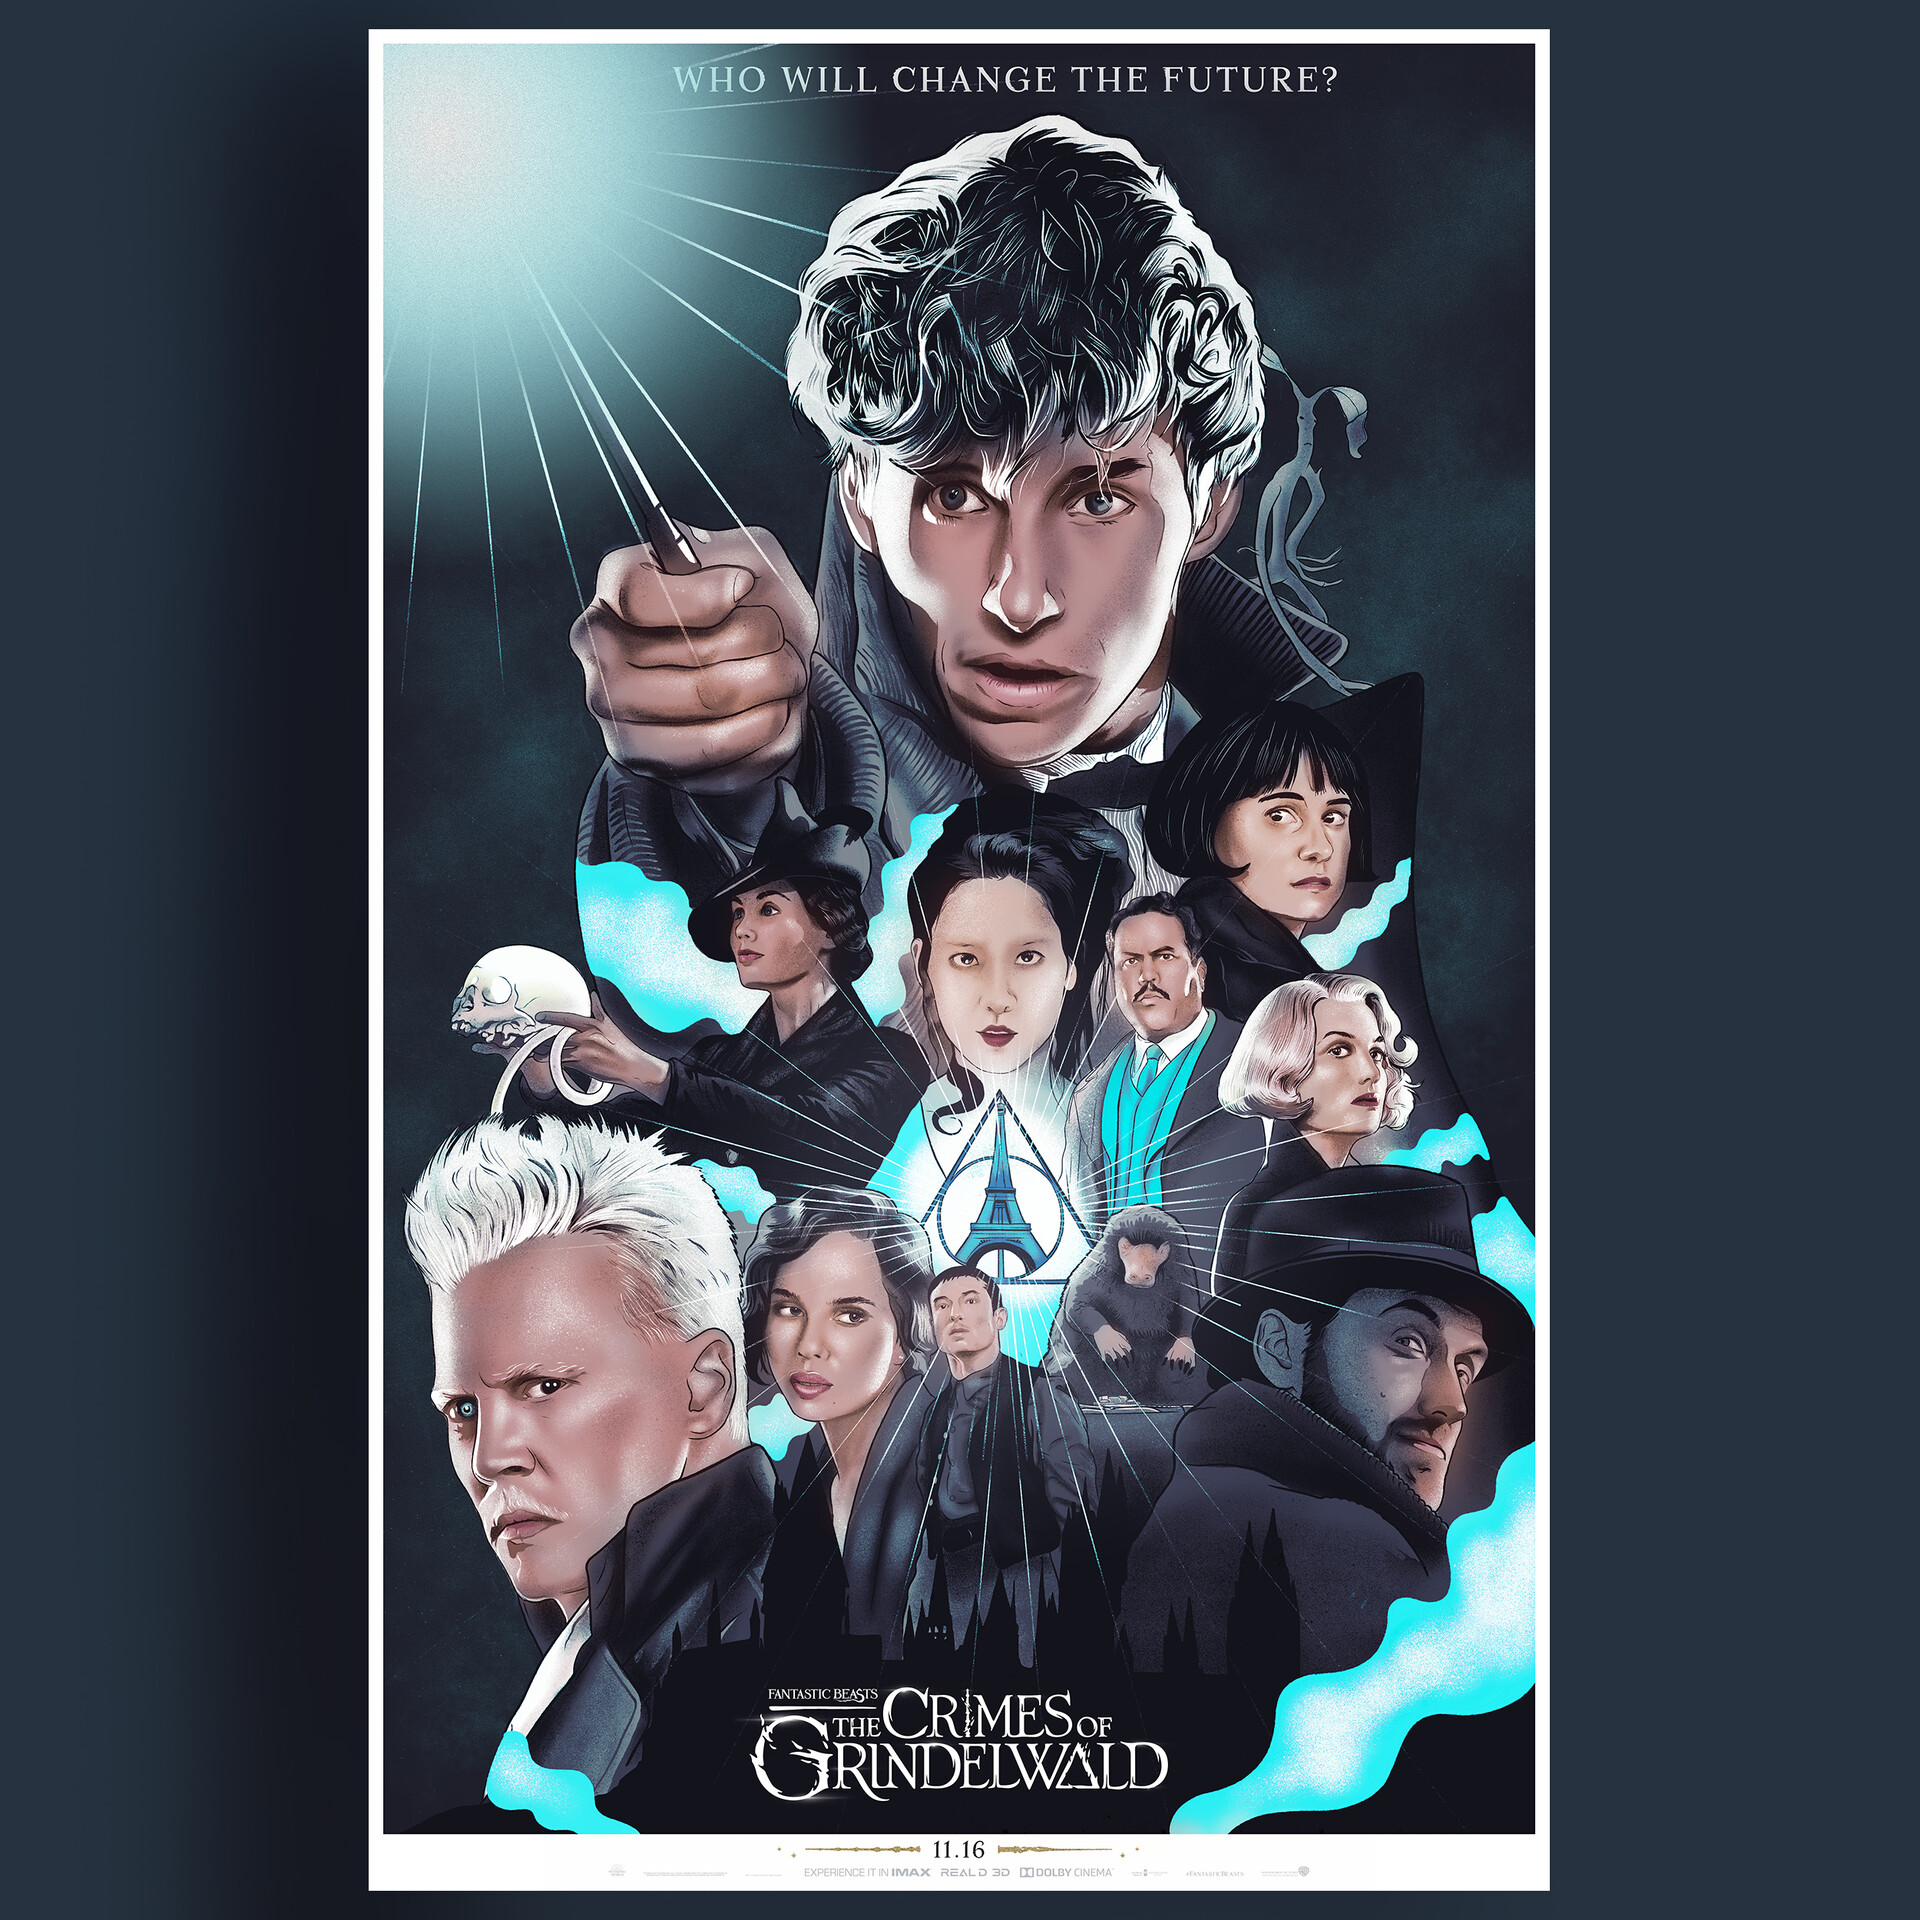 Fantastic Beasts The Crimes Of Grindelwald Poster Artwork Wallpapers